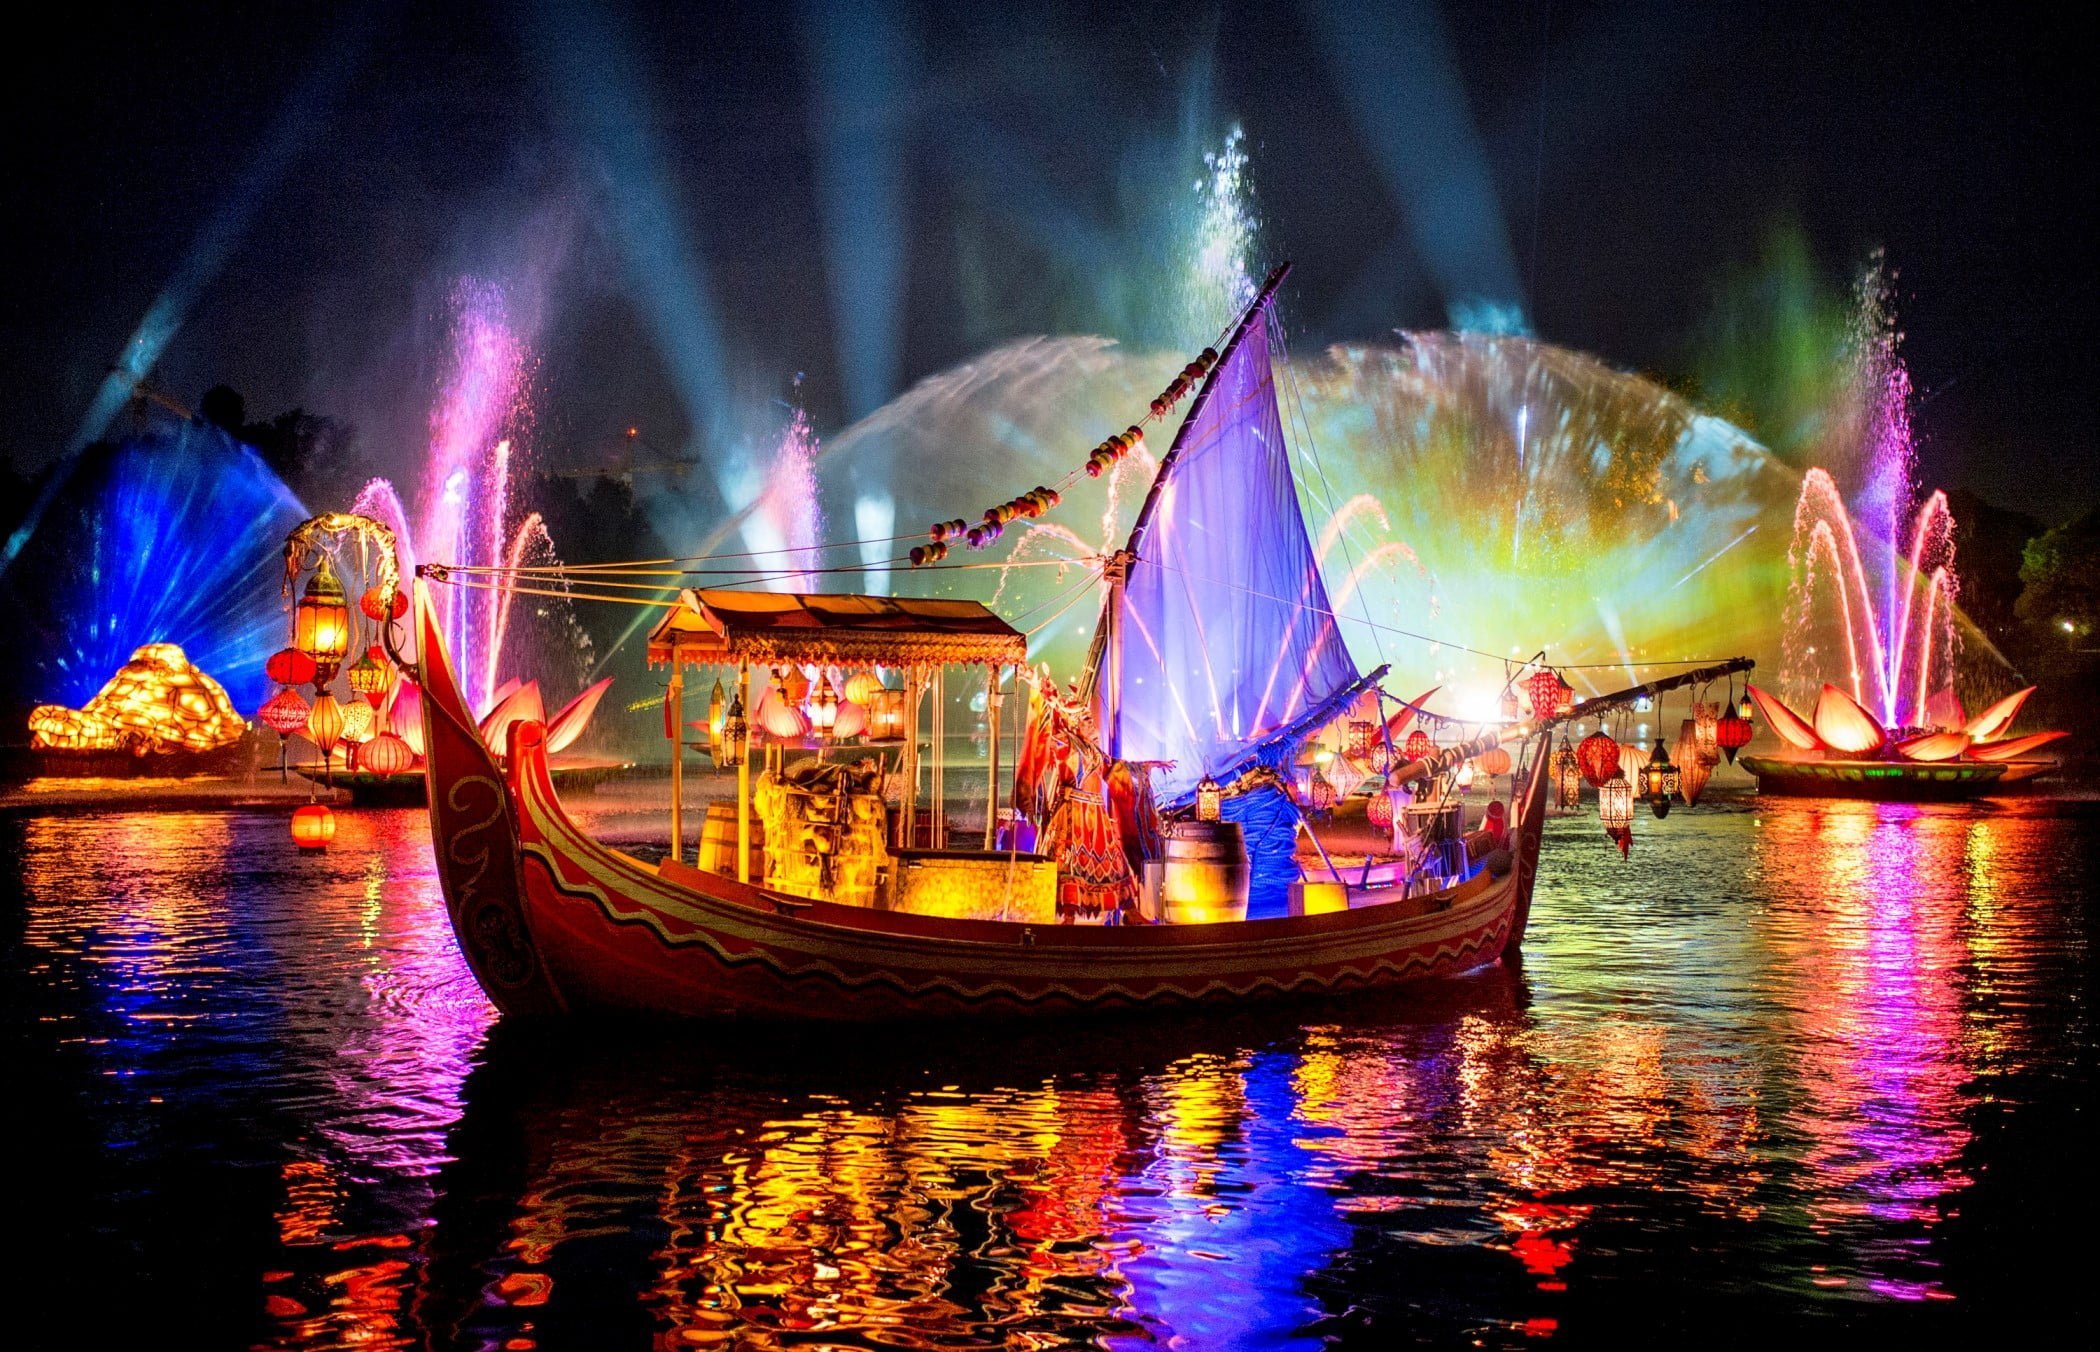 Rivers of Light - novo show do Disney's Animal Kingdom  - crédito Watl Disney World (6) - b